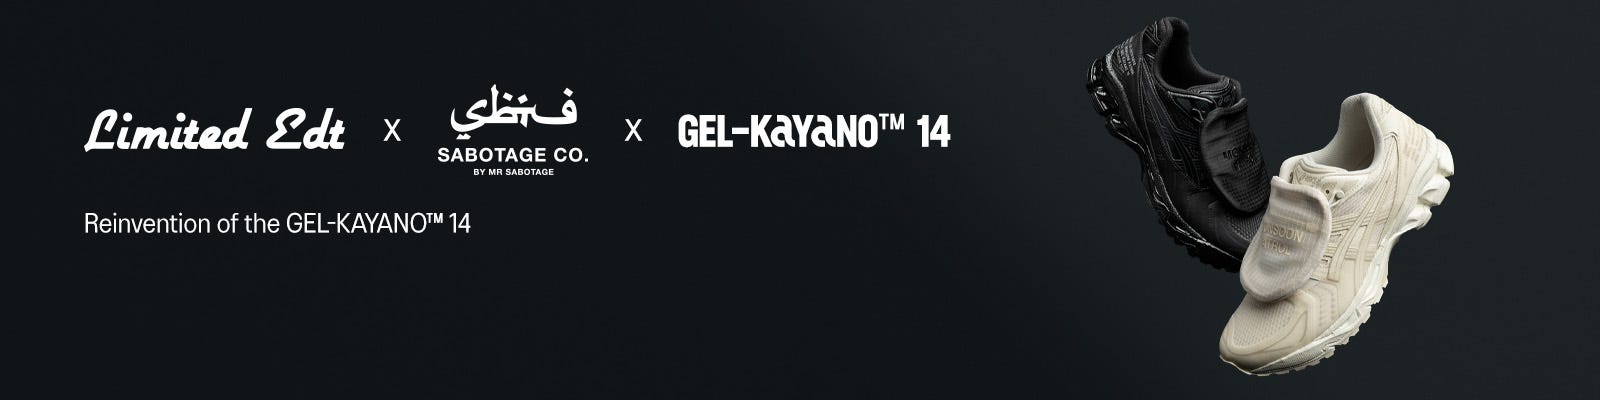 LIMITED EDT X SBTG X GEL-KAYANO™ 14